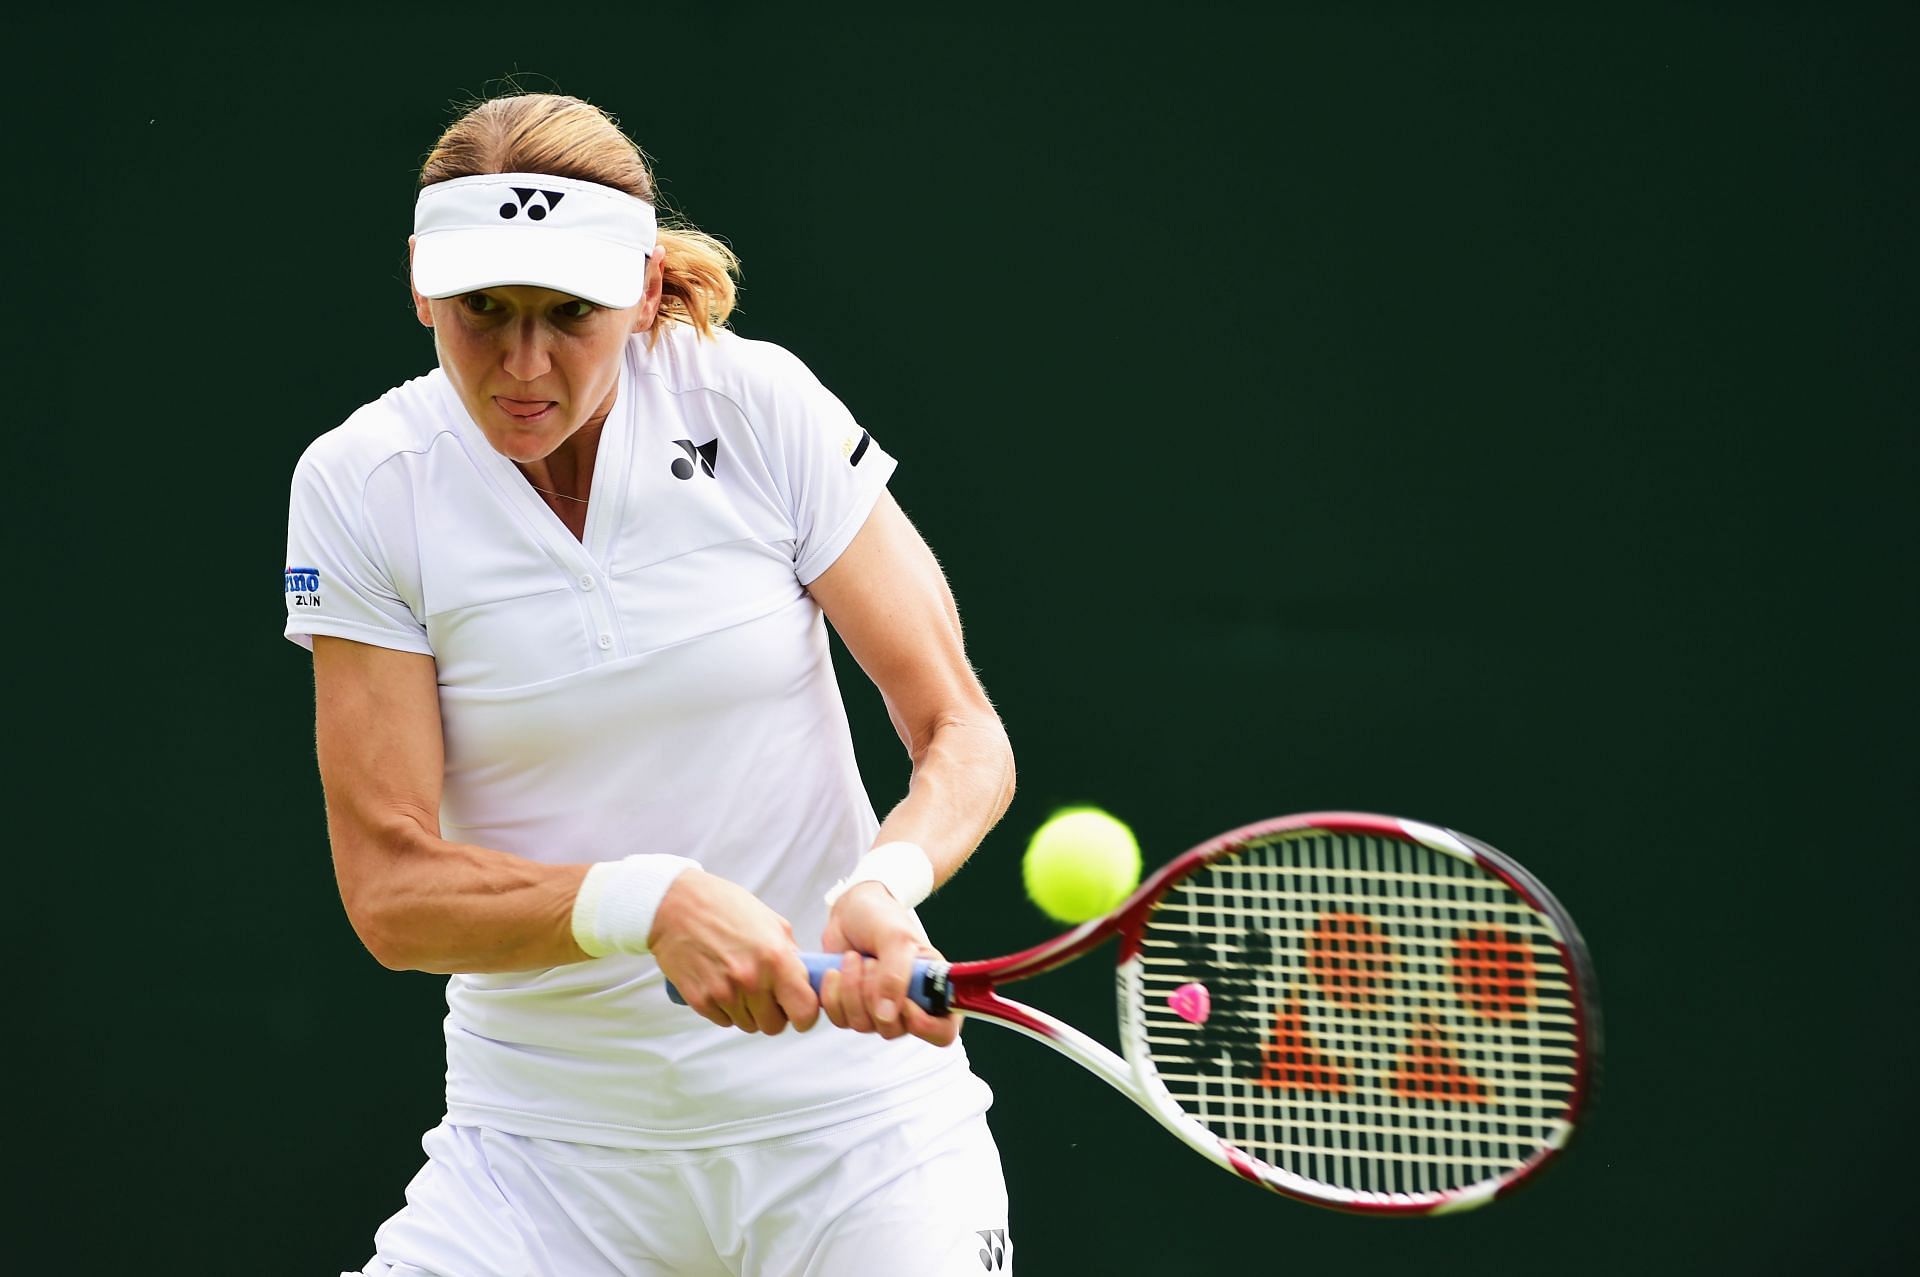 Renata Voracova during a match at the 2015 Wimbledon Championships